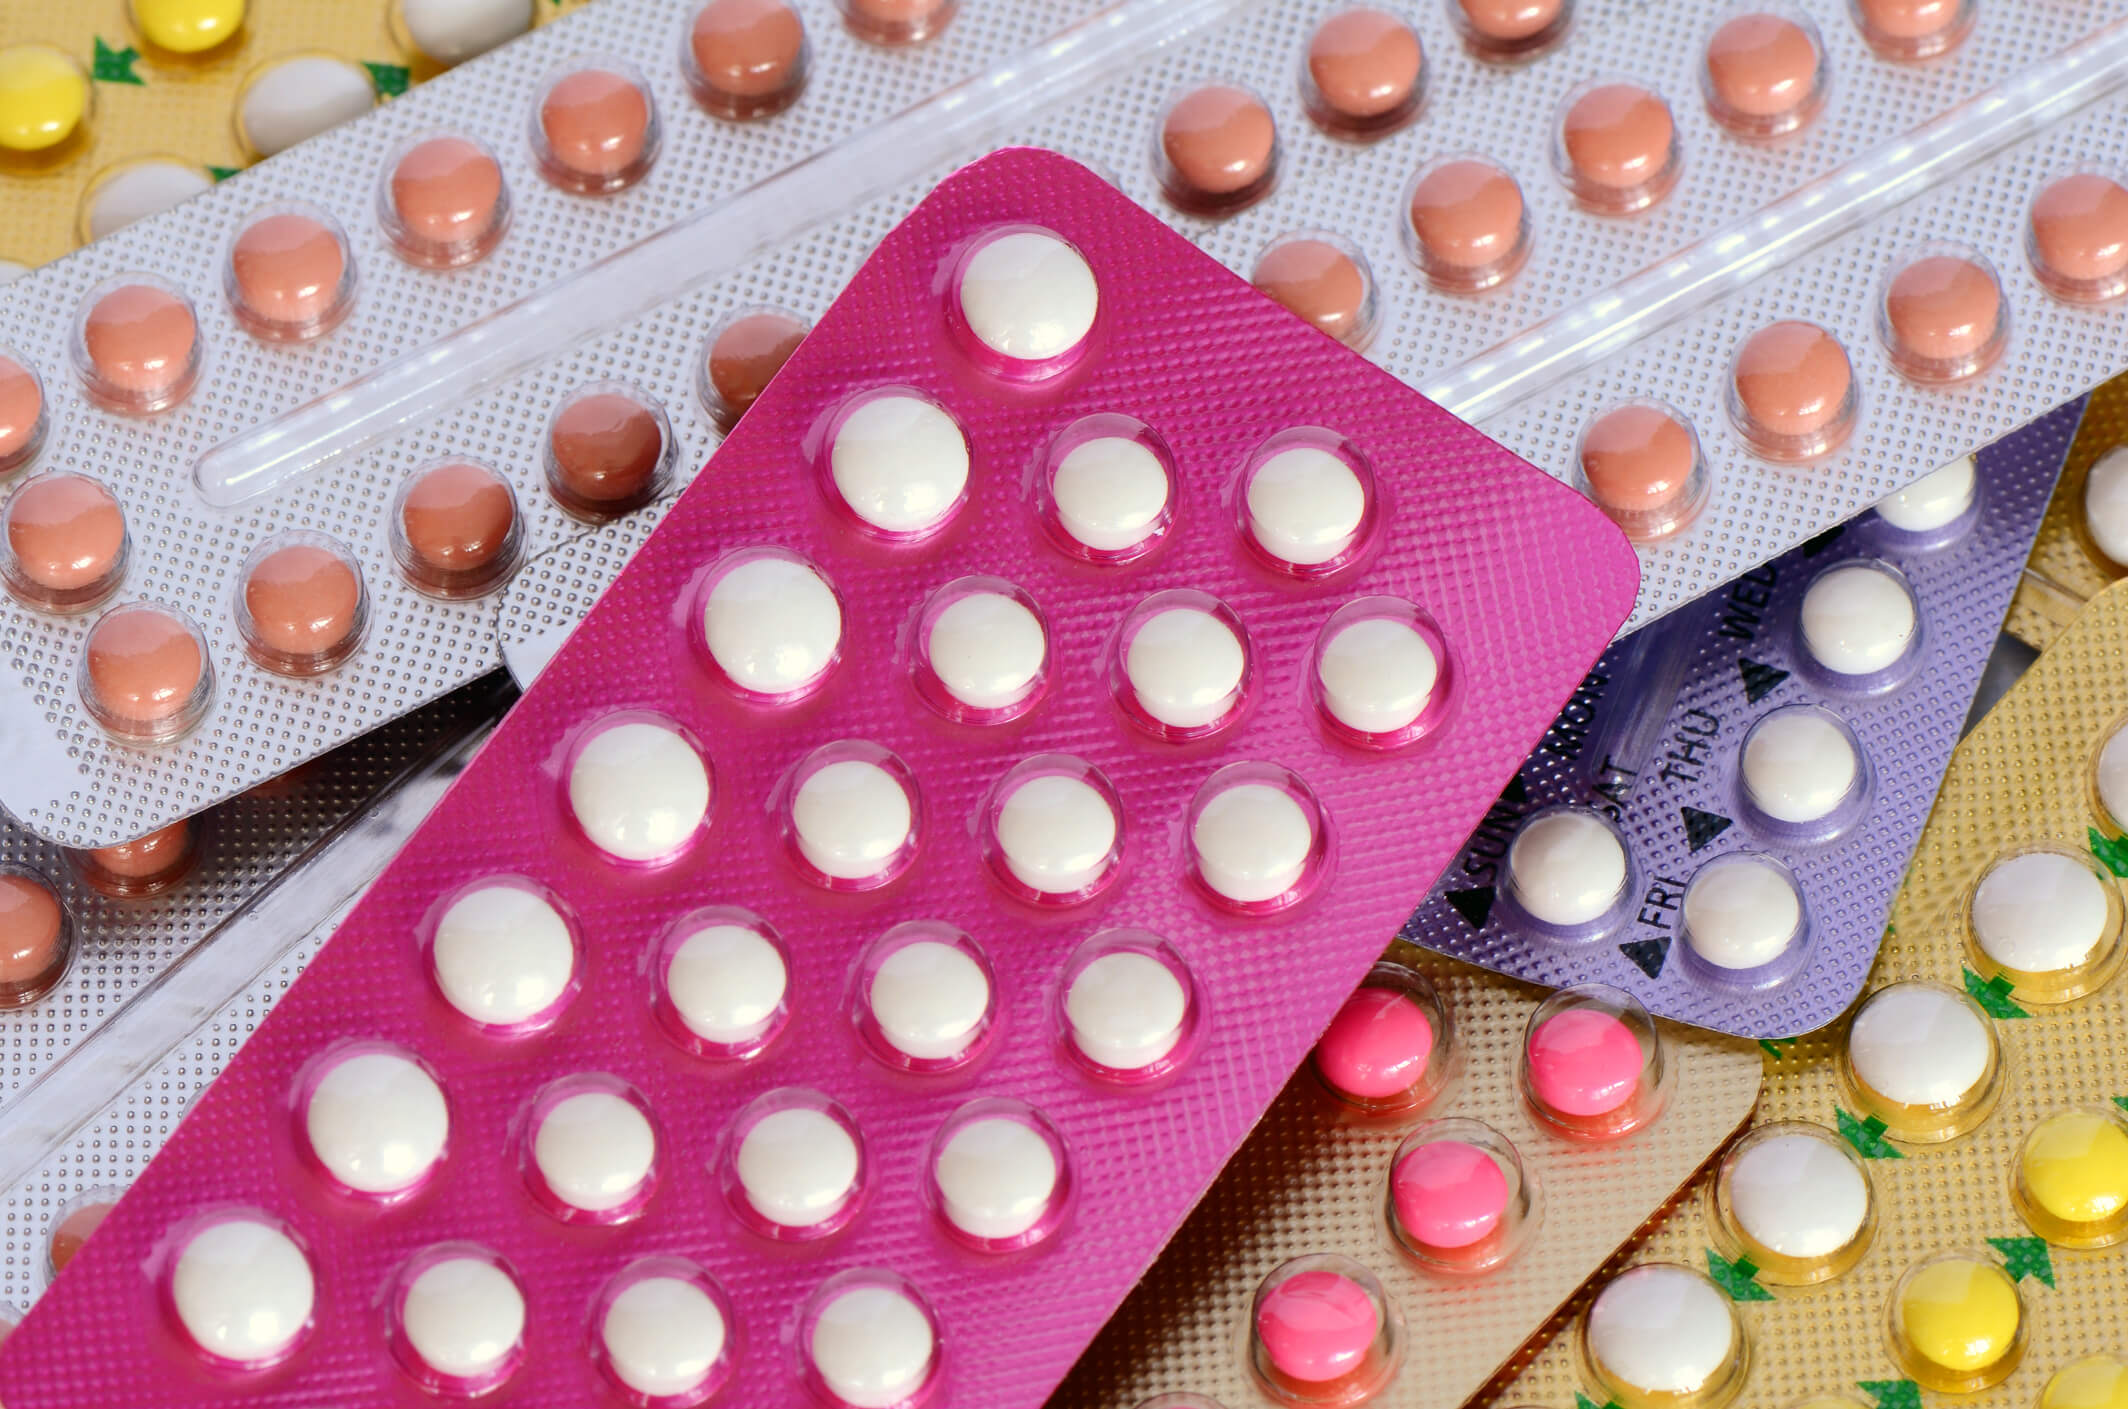 Packs of birth control pills